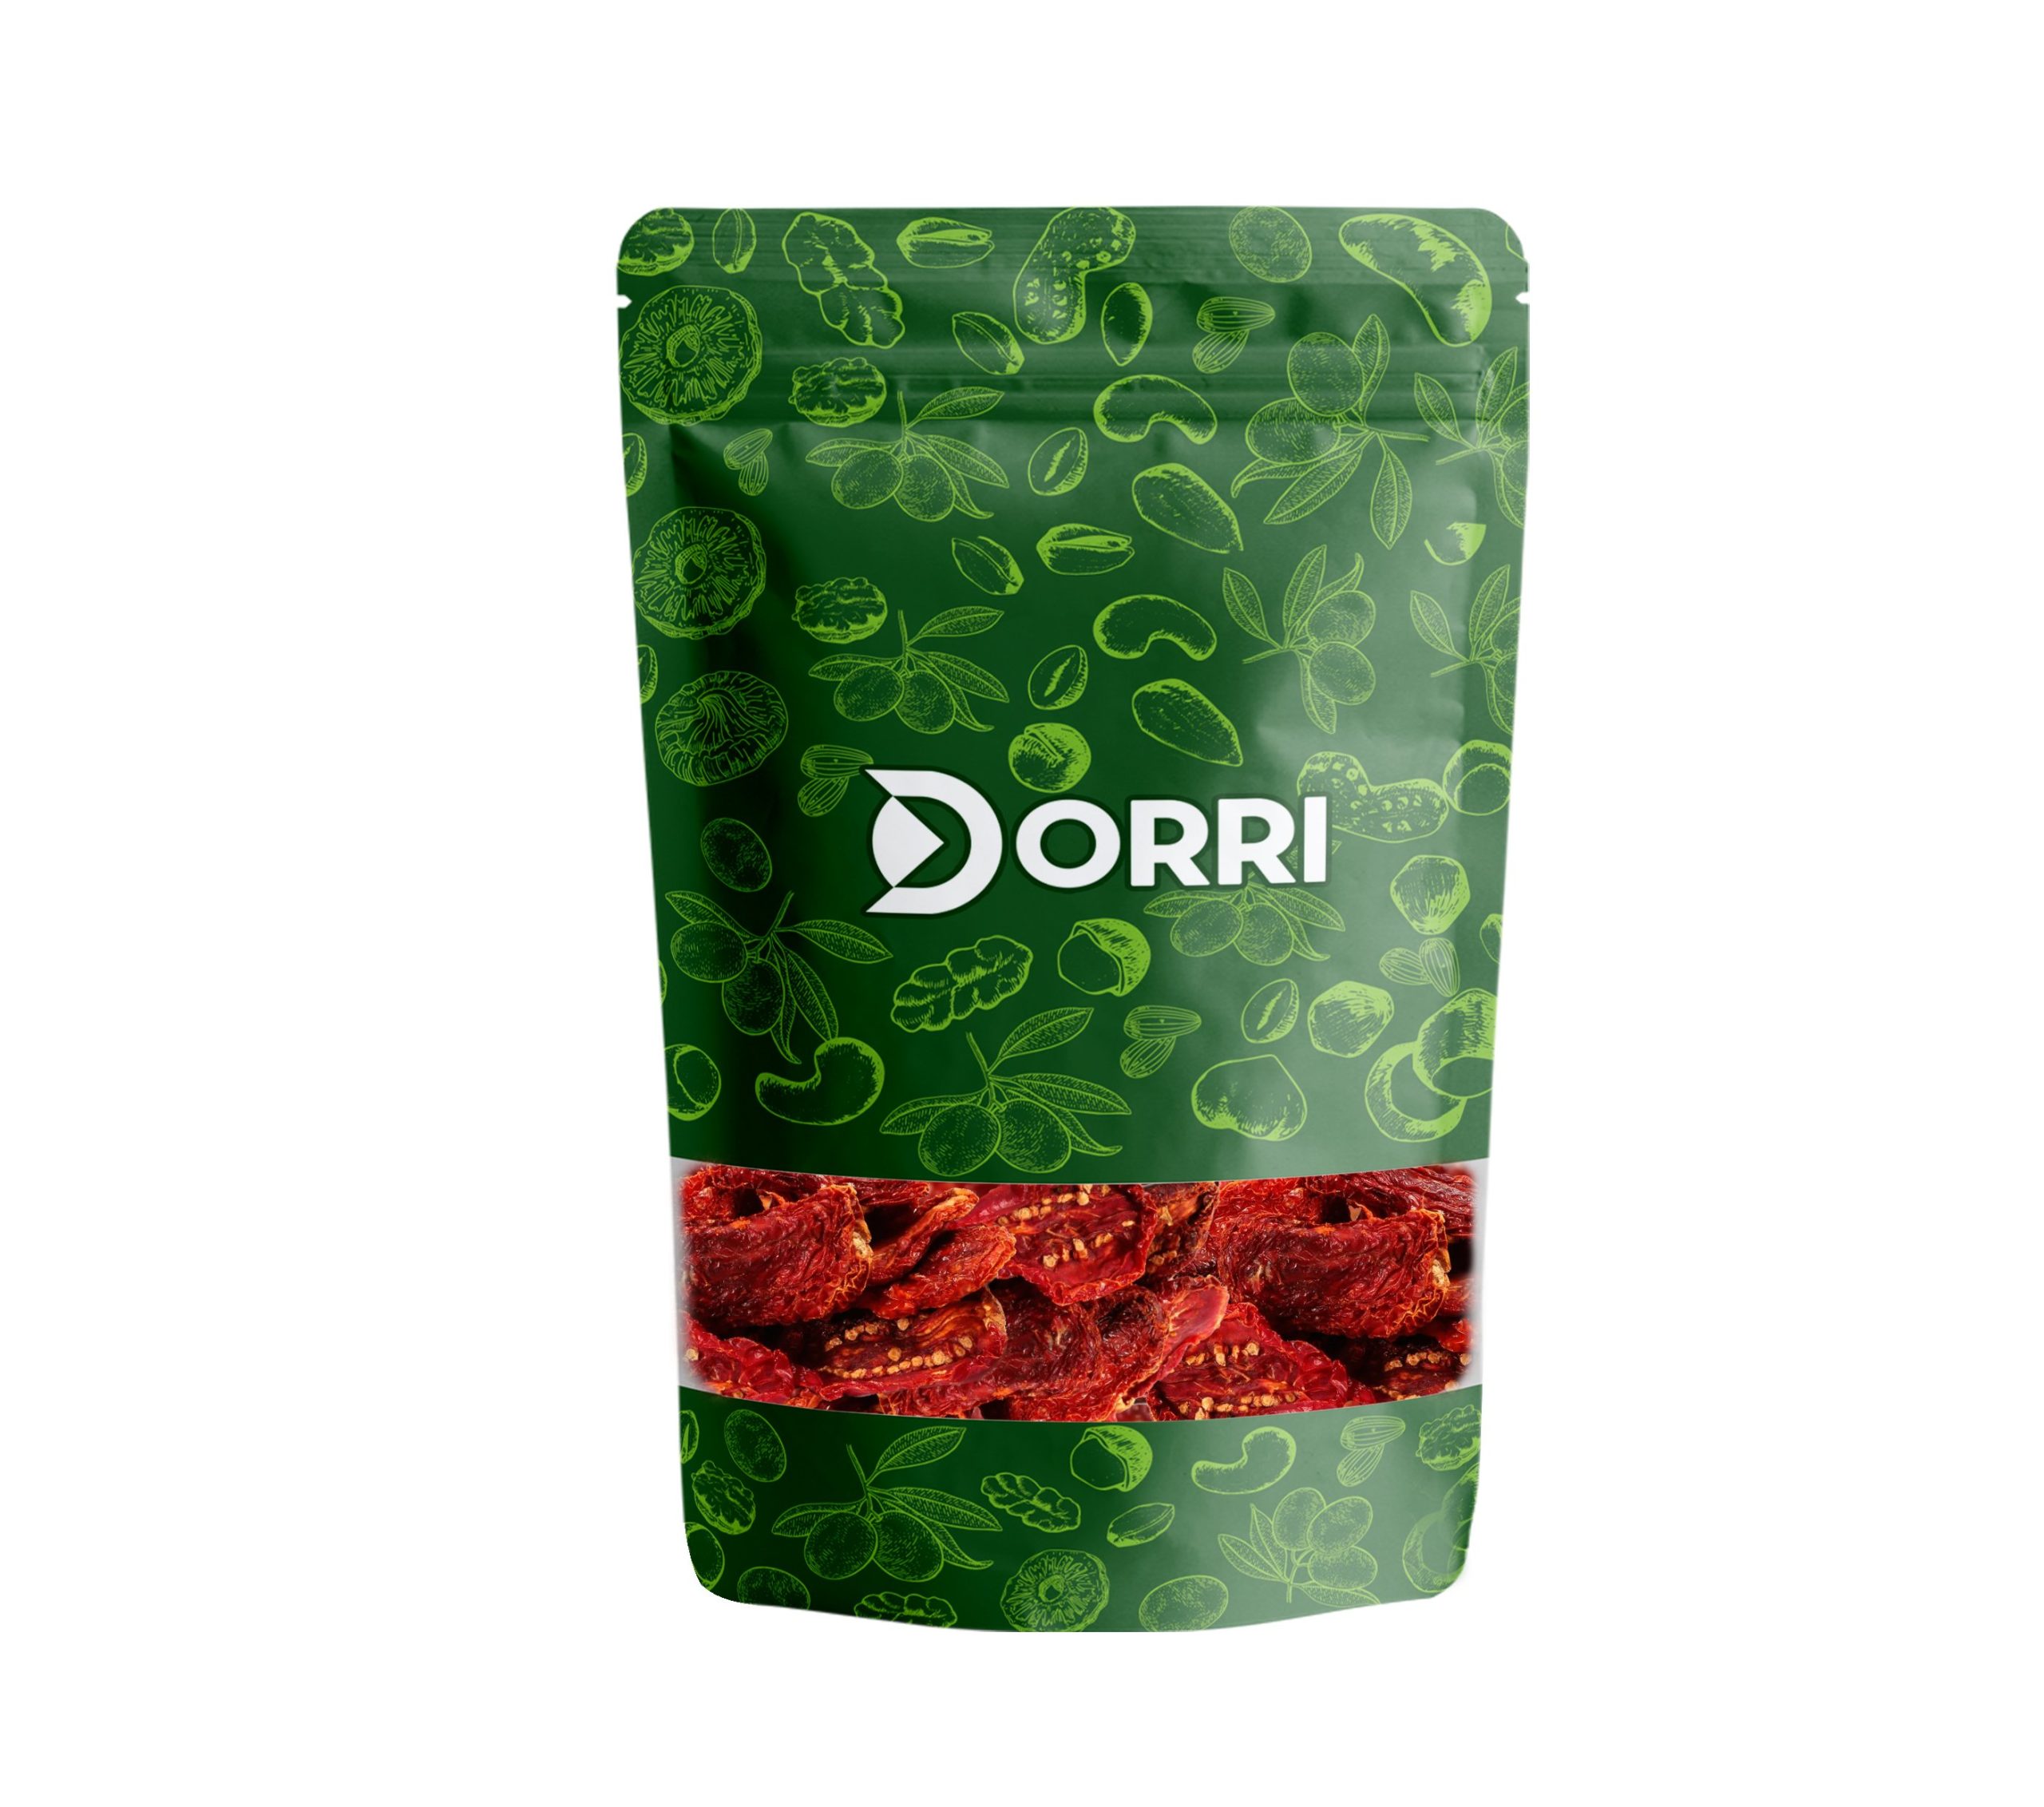 Dorri - Sun Dried Tomatoes Halves